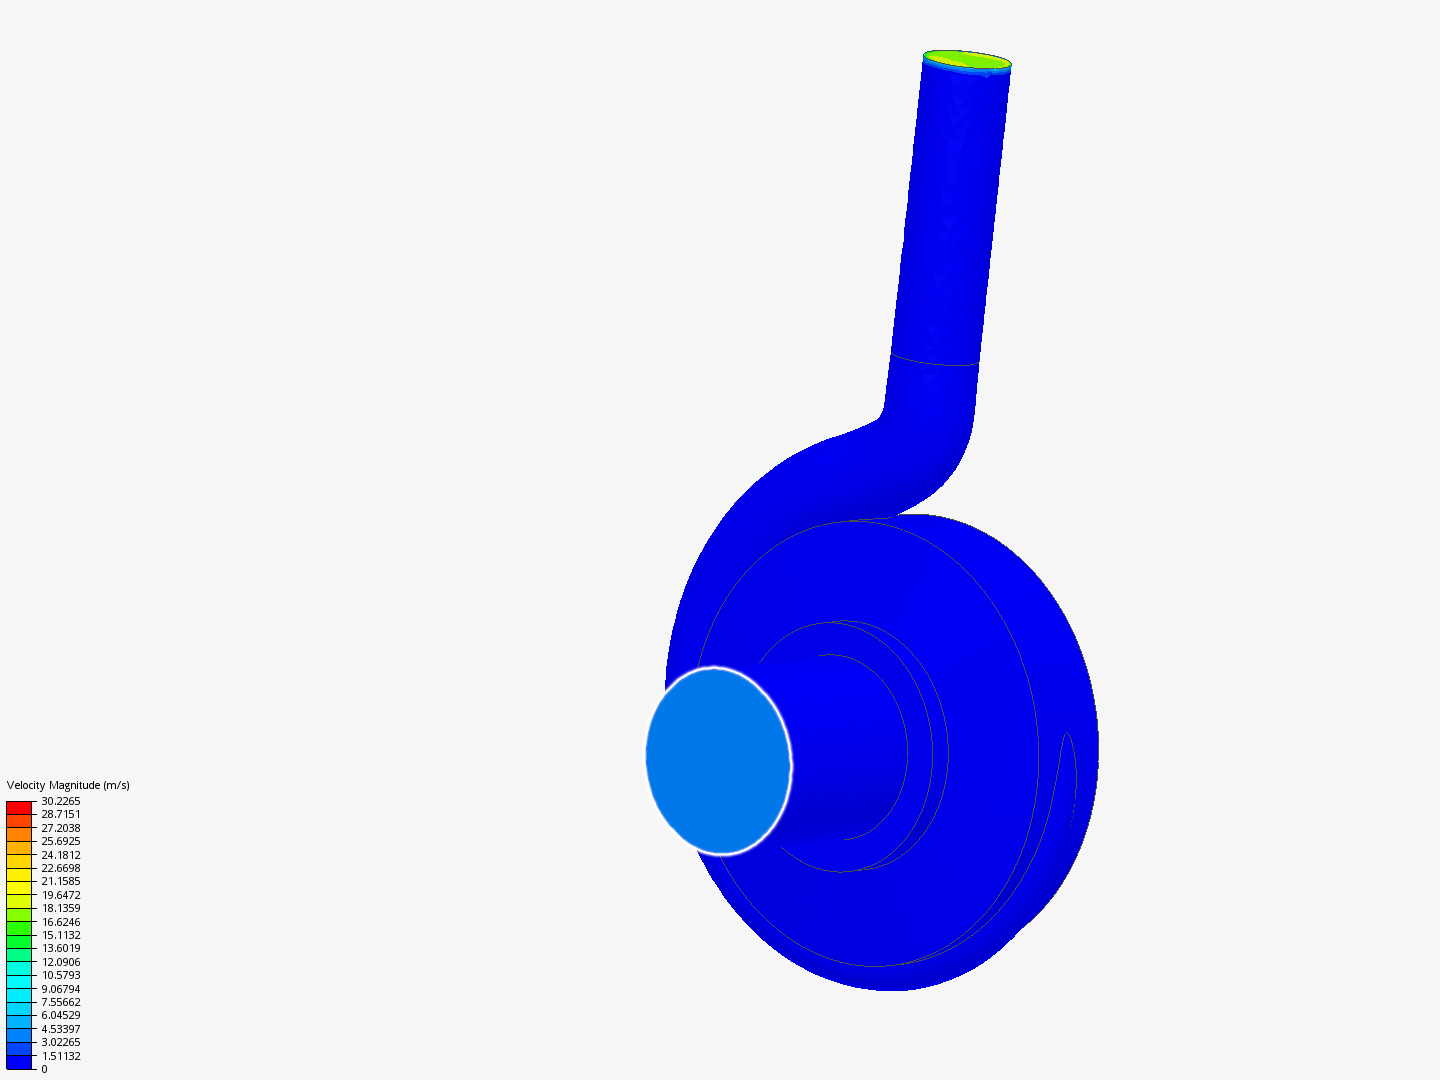 Pump CFD Simulation (CENTRIFUGAL PUMP) - Copy image